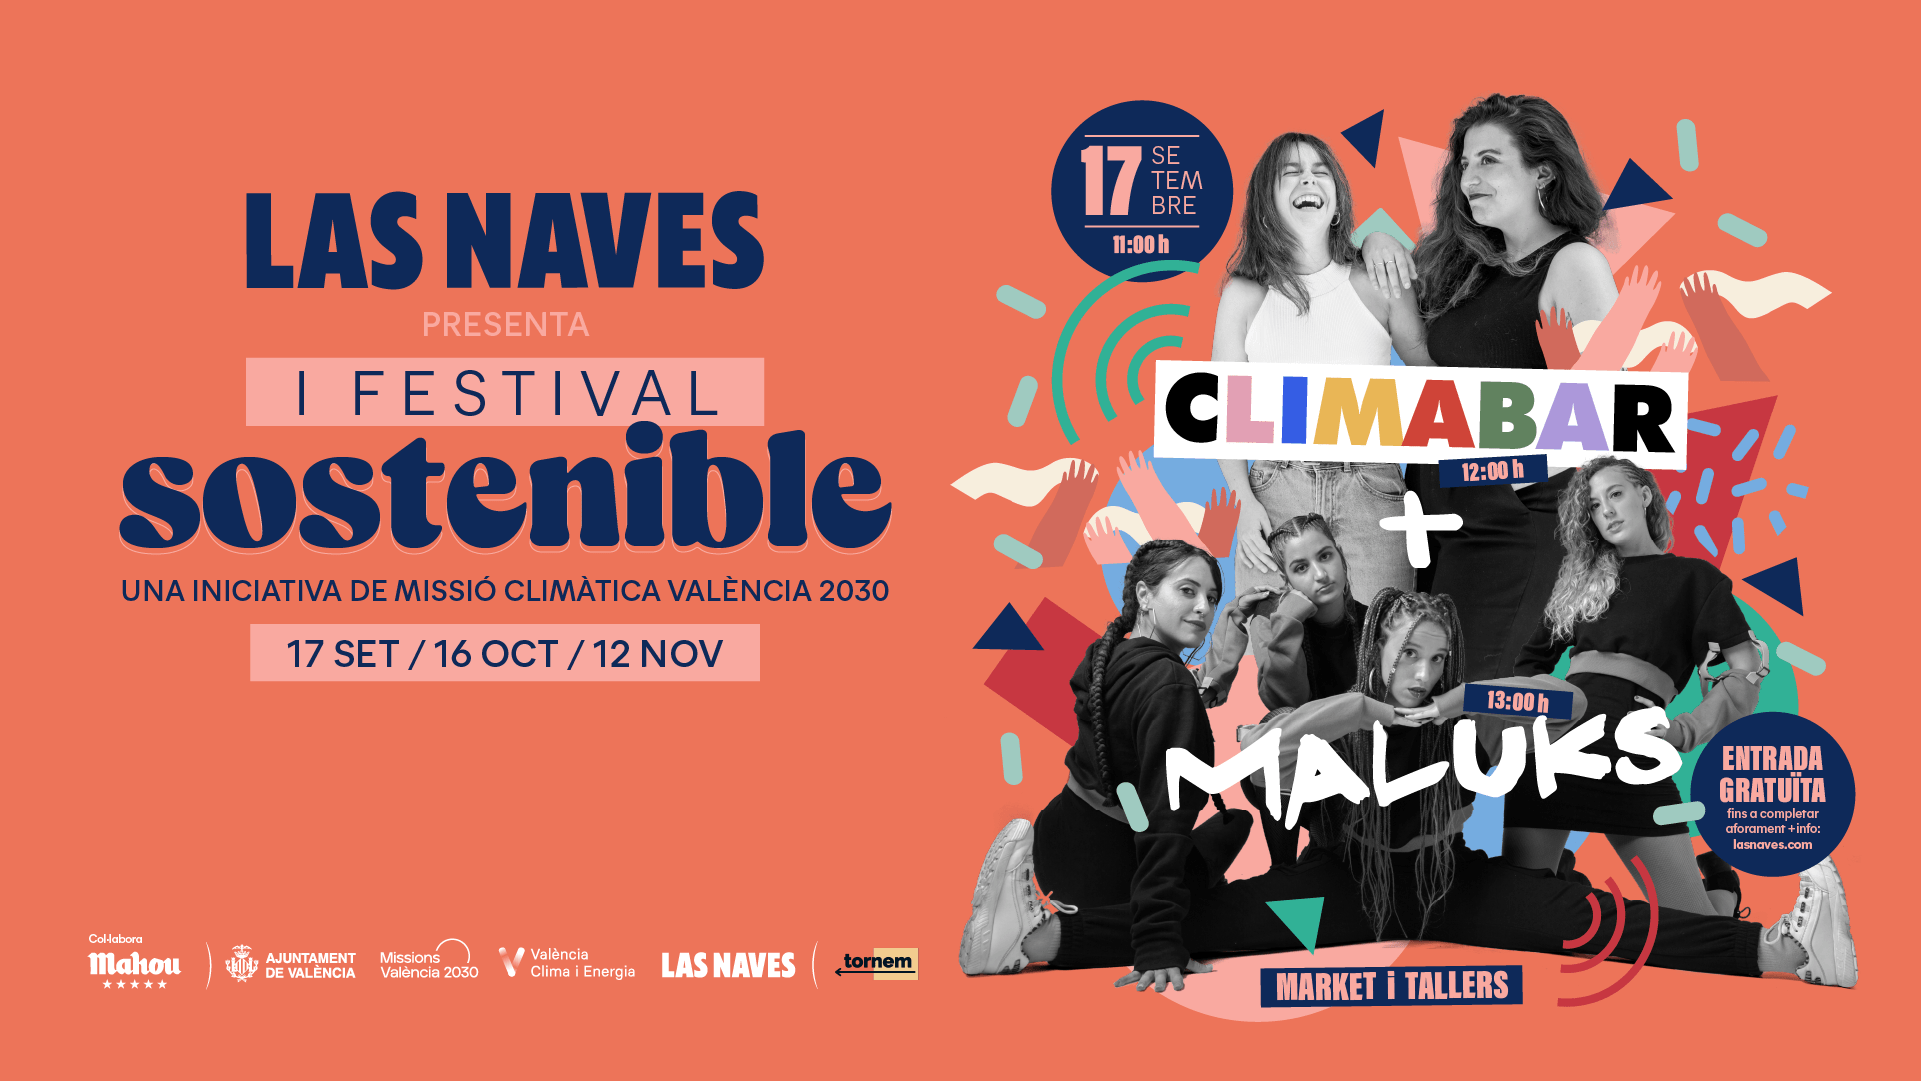 Cartell anunciador del I Festival Sostenible de Las Naves